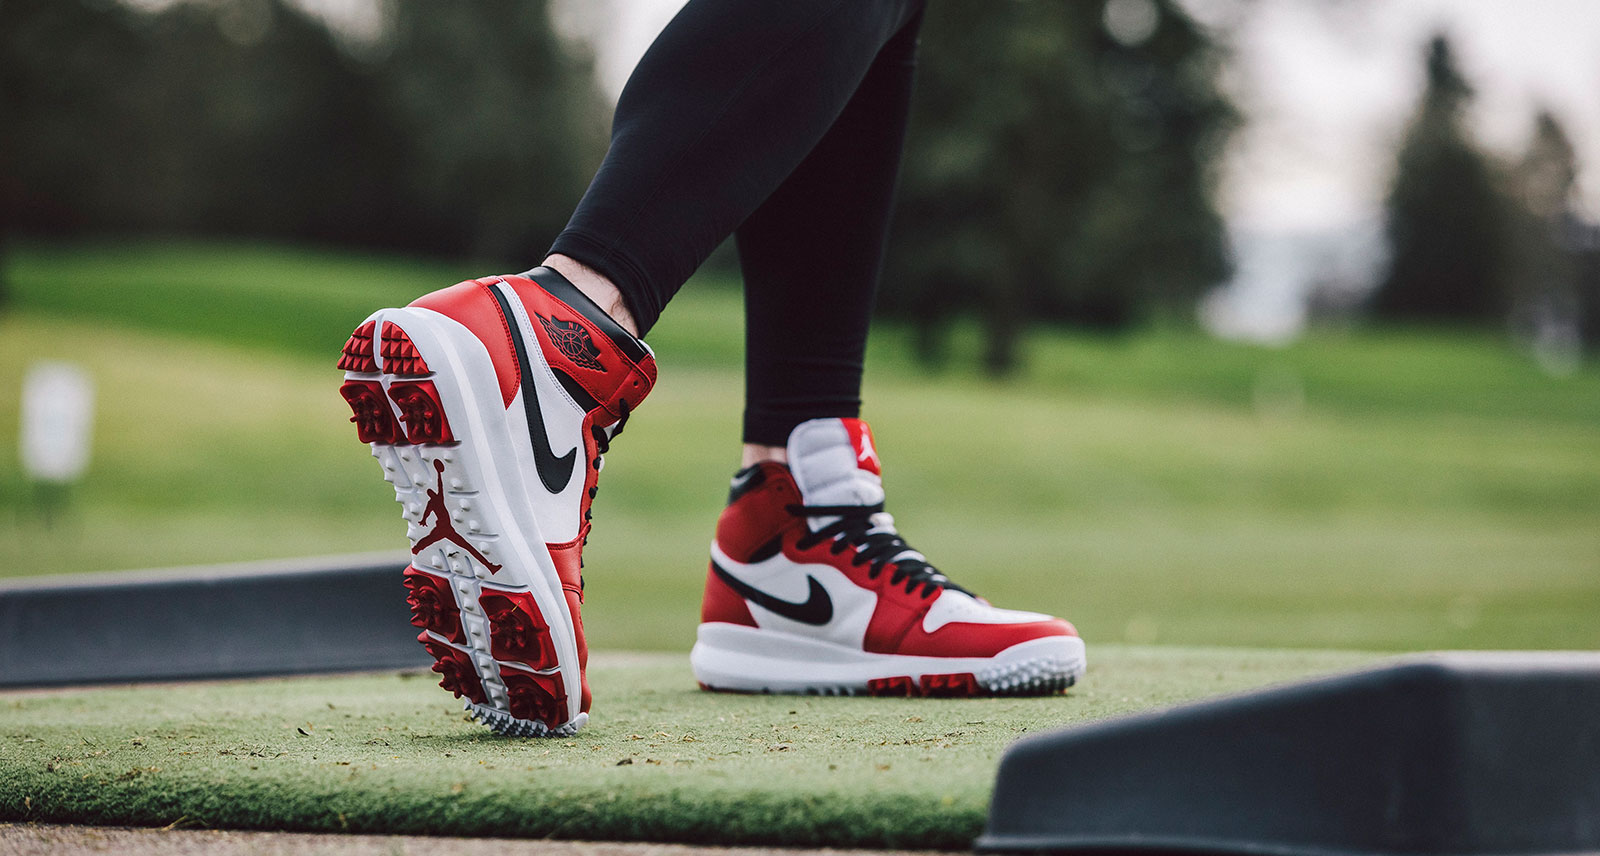 Air Jordan Now Makes Golf Shoes That 